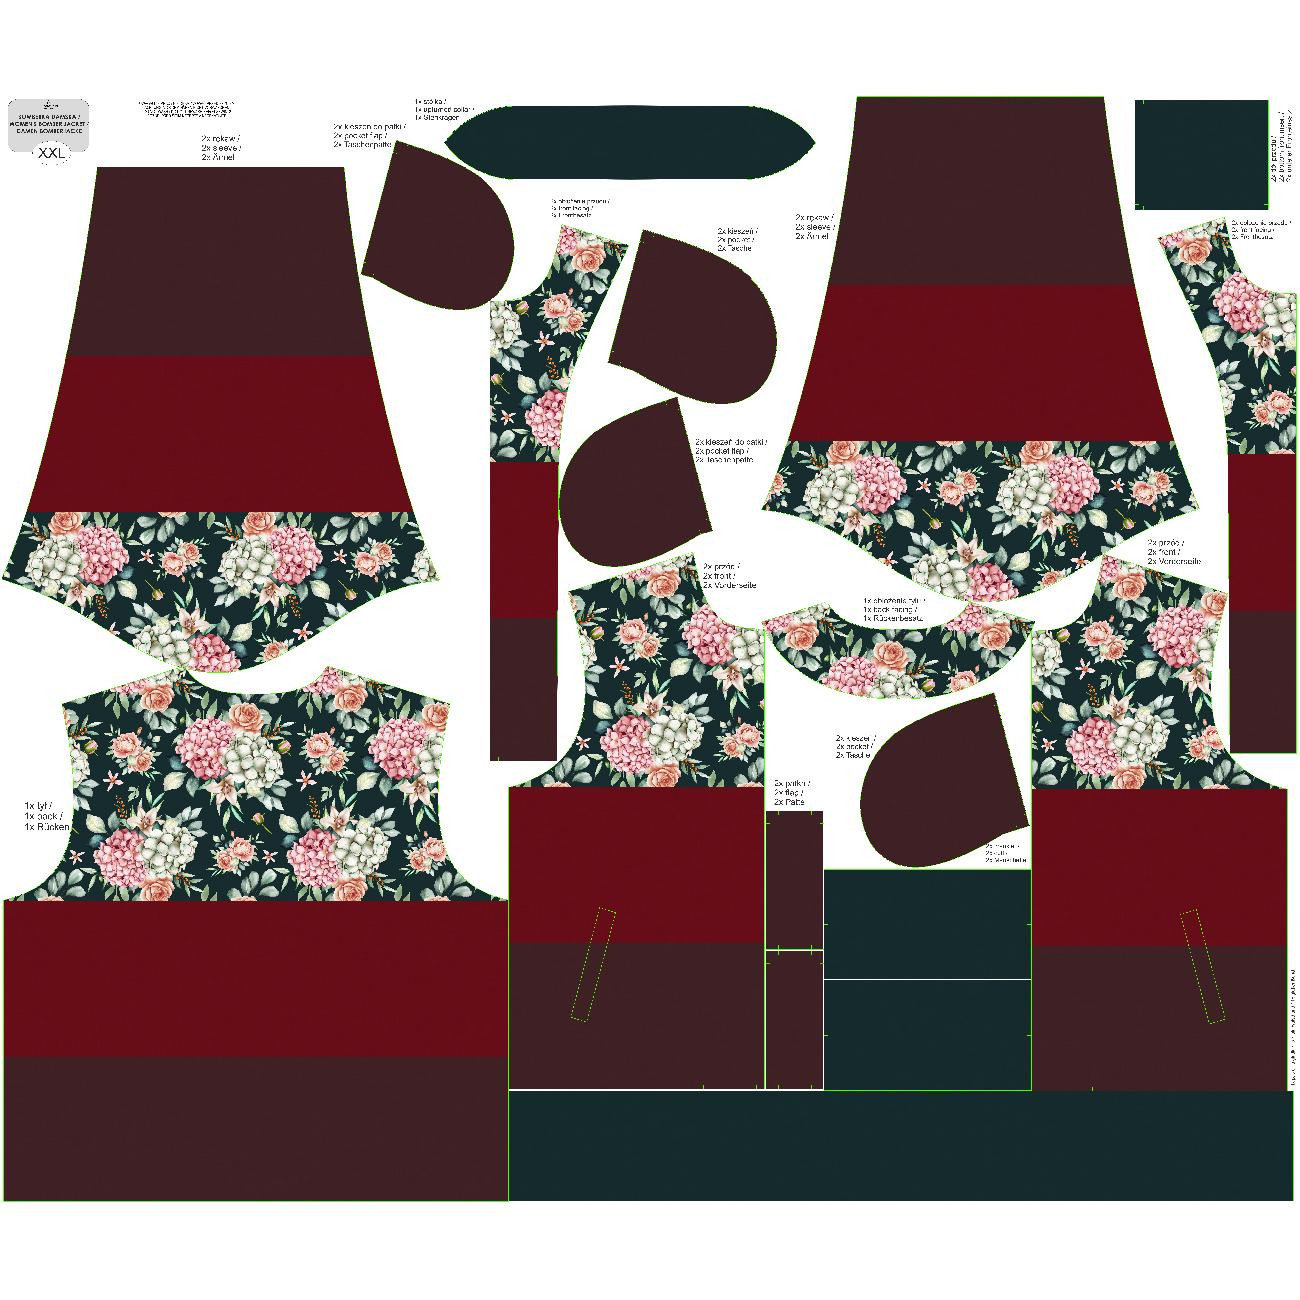 WOMEN’S BOMBER JACKET (KAMA) - Hydrangeas - sewing set